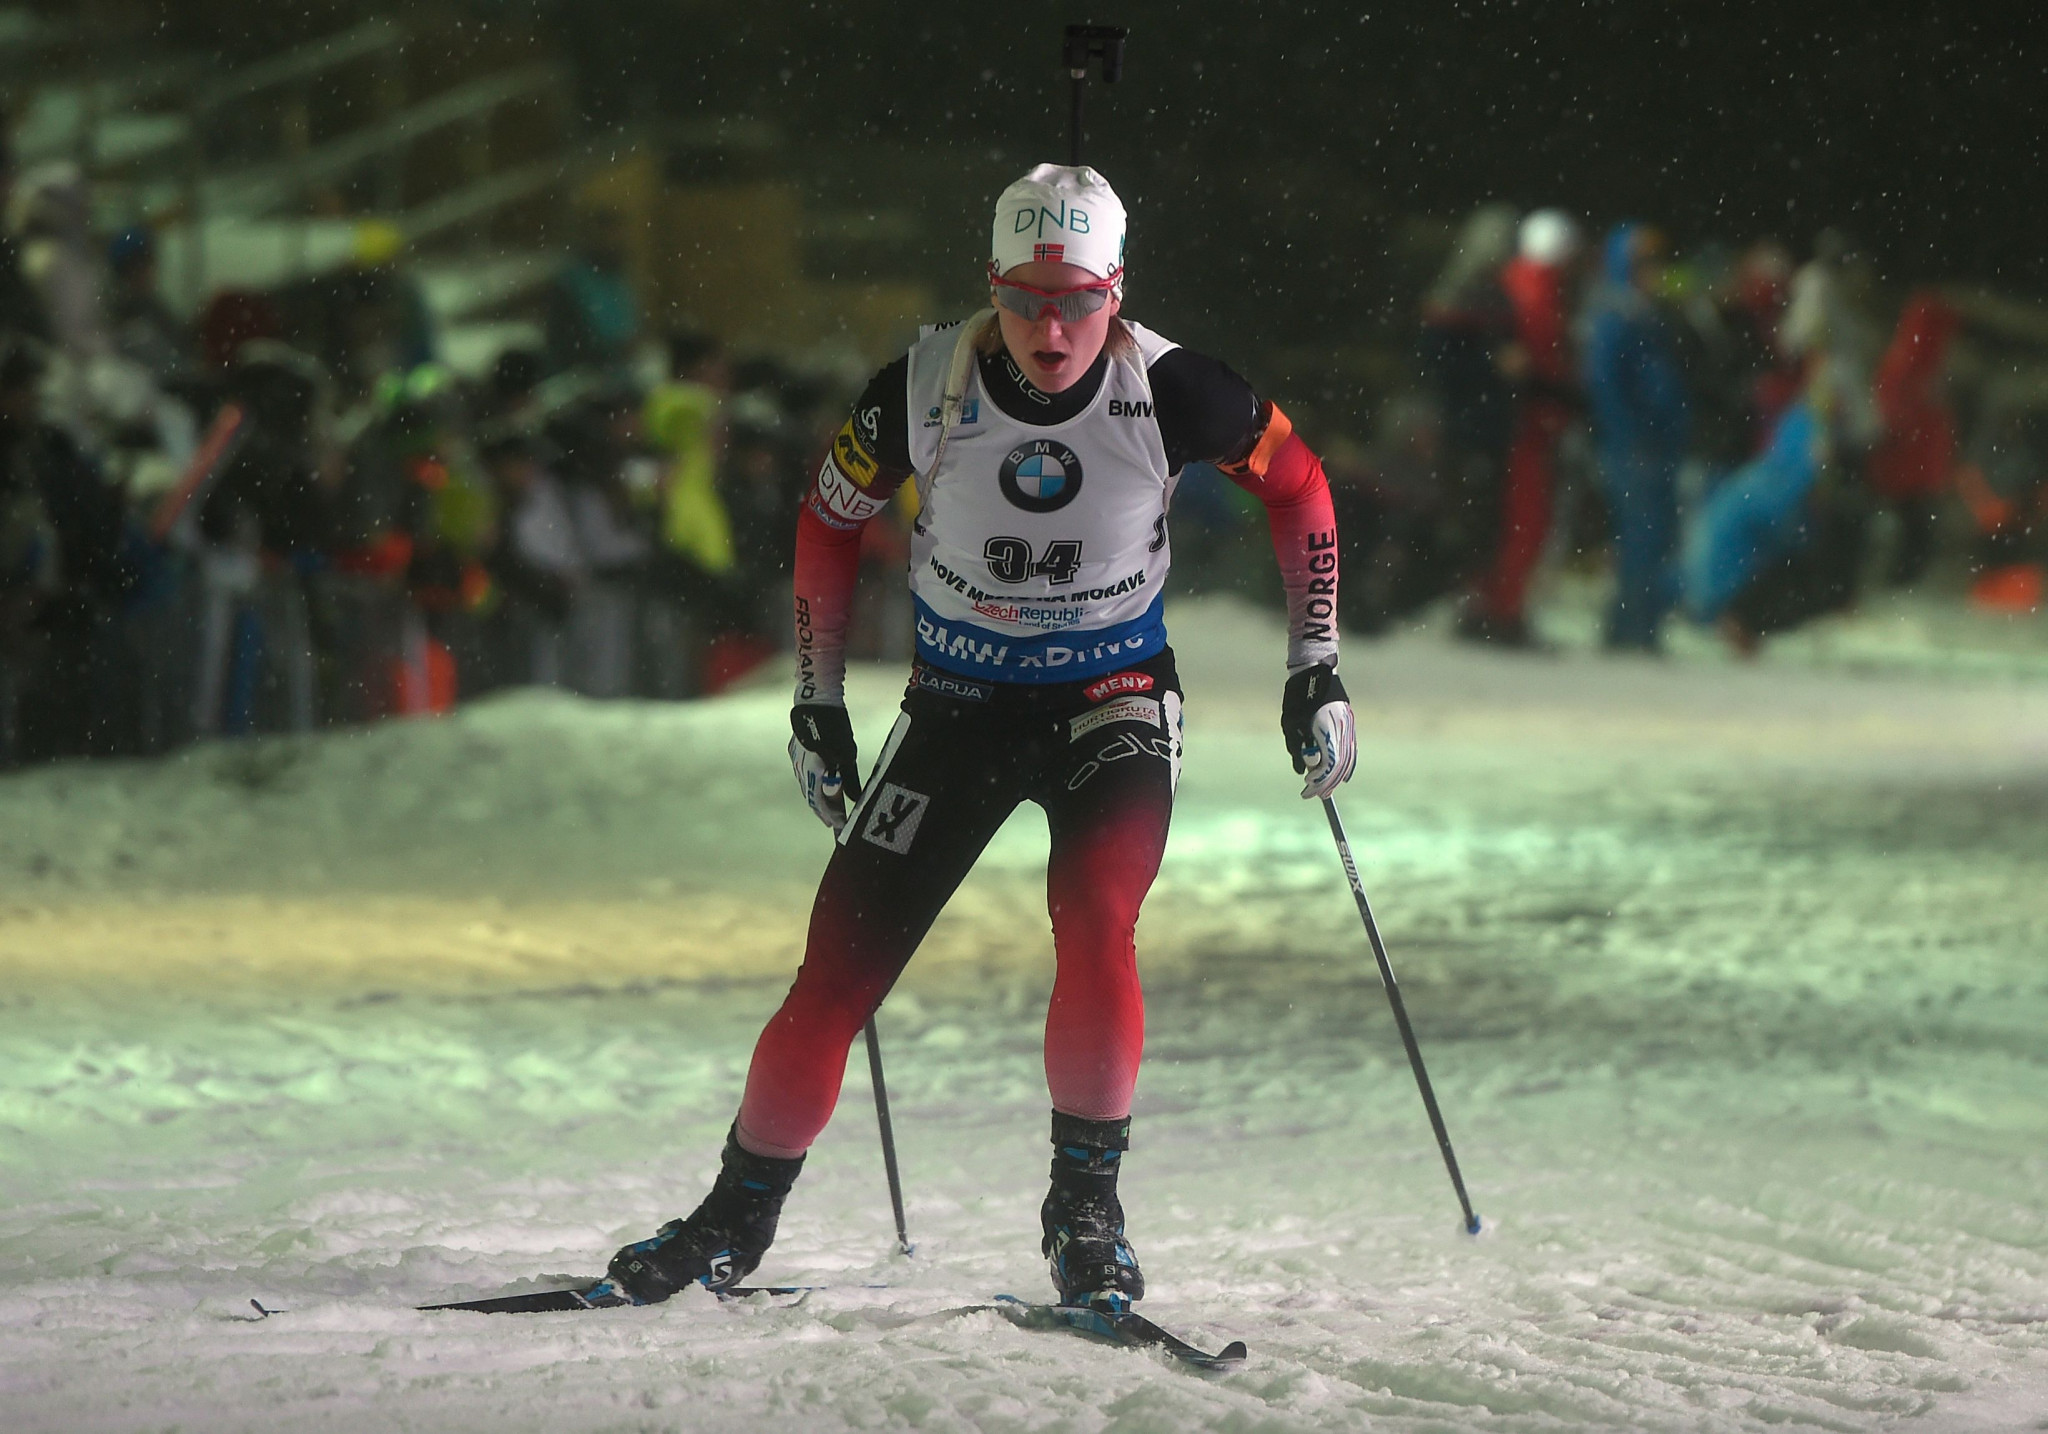 Marte Olsbu Røiseland claimed her maiden International Biathlon Union World Cup title ©Getty Images